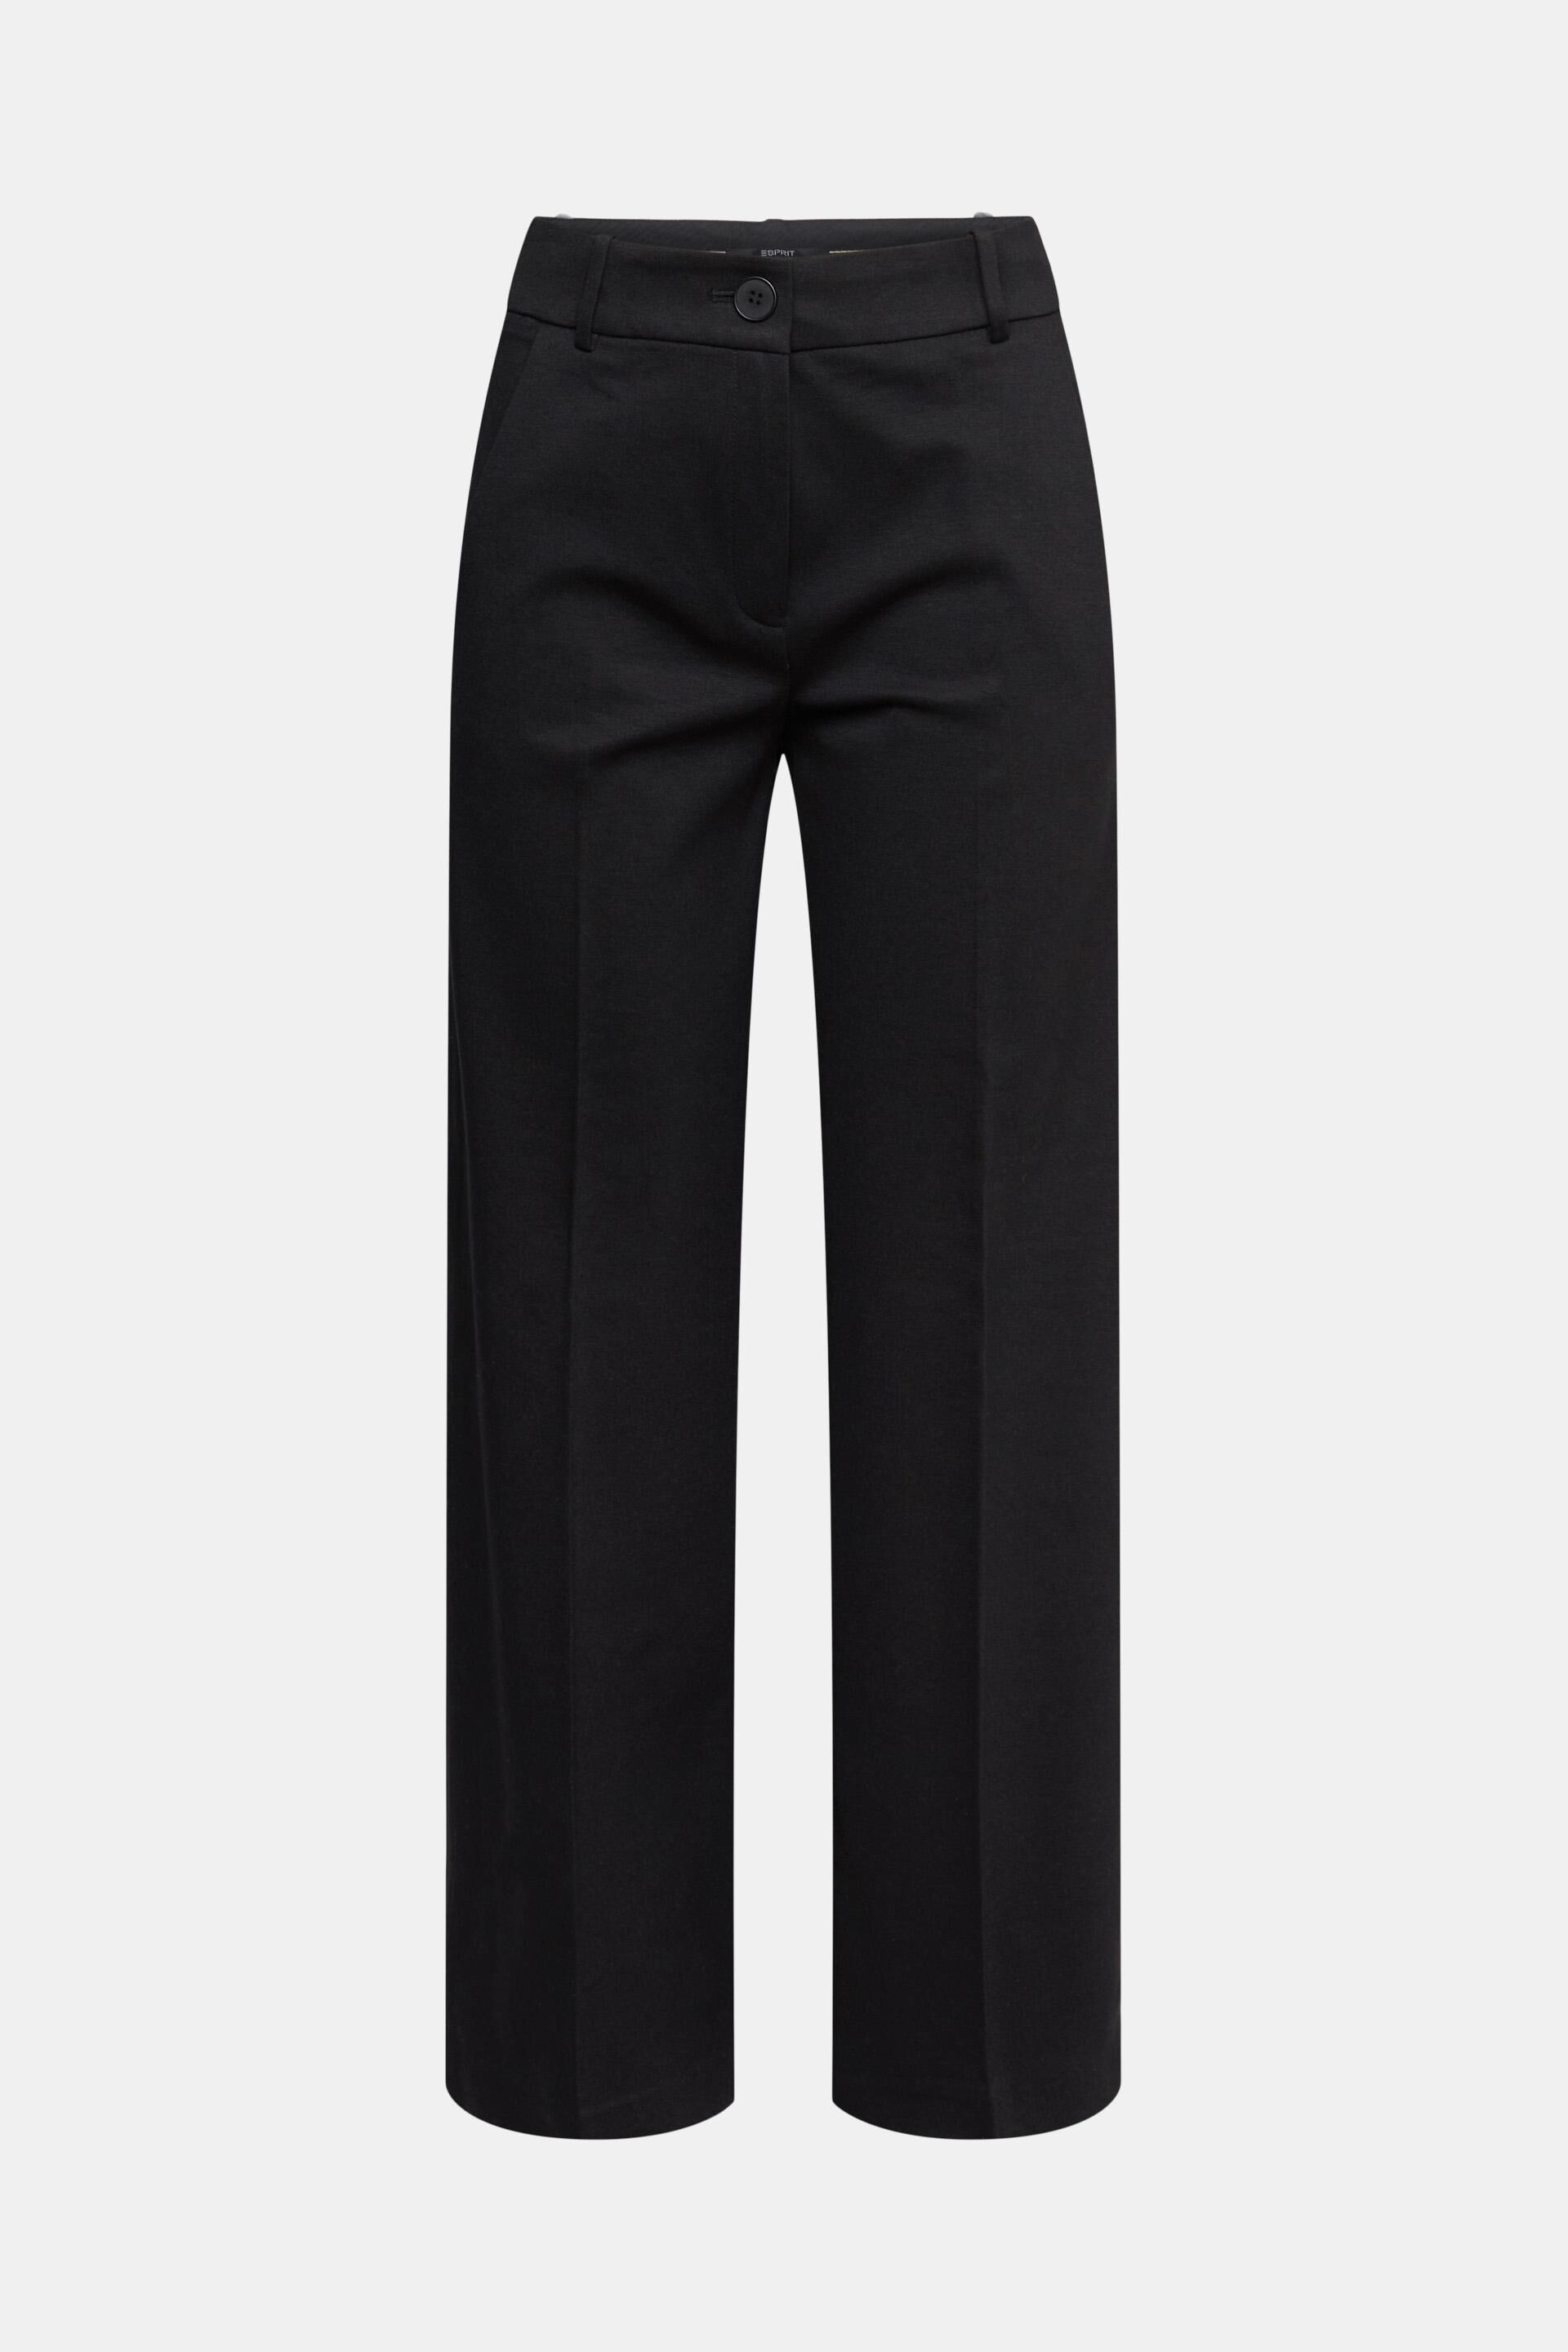 Zara Woman Jersey Pants black business style Fashion Trousers Jersey Pants 